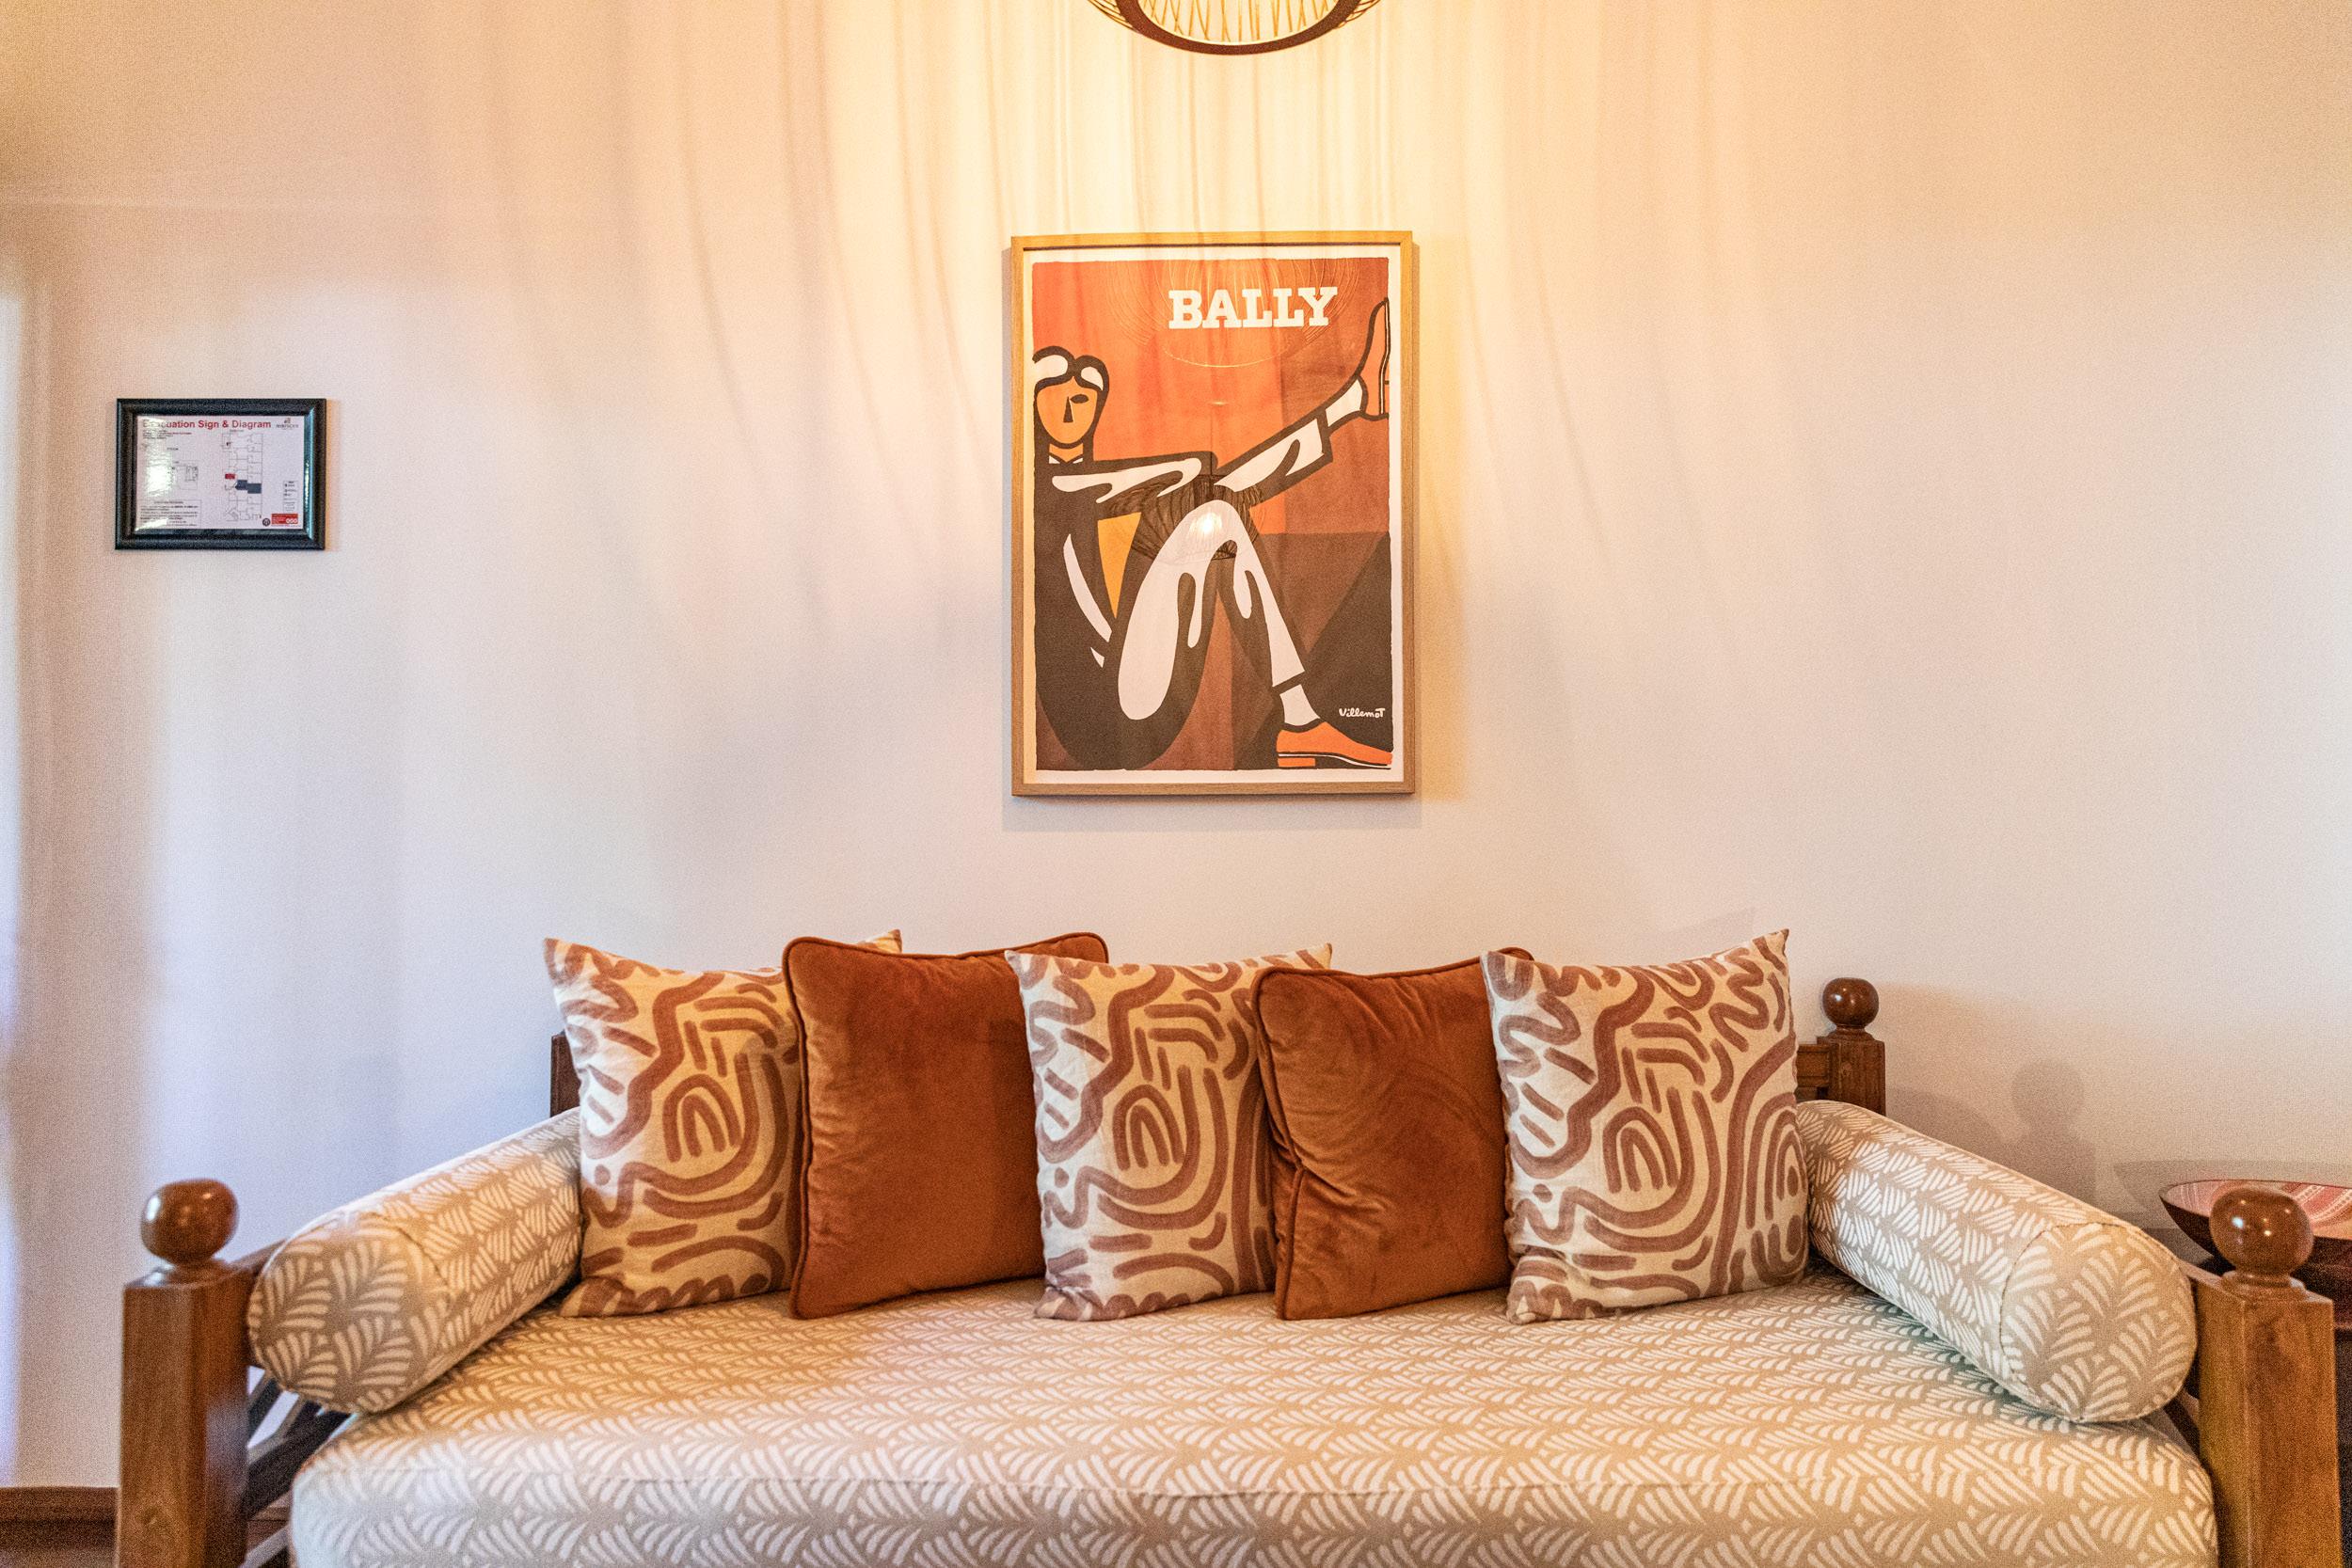 1 Bedroom Apartment ~ BALLY meets Bali @ Hibiscus